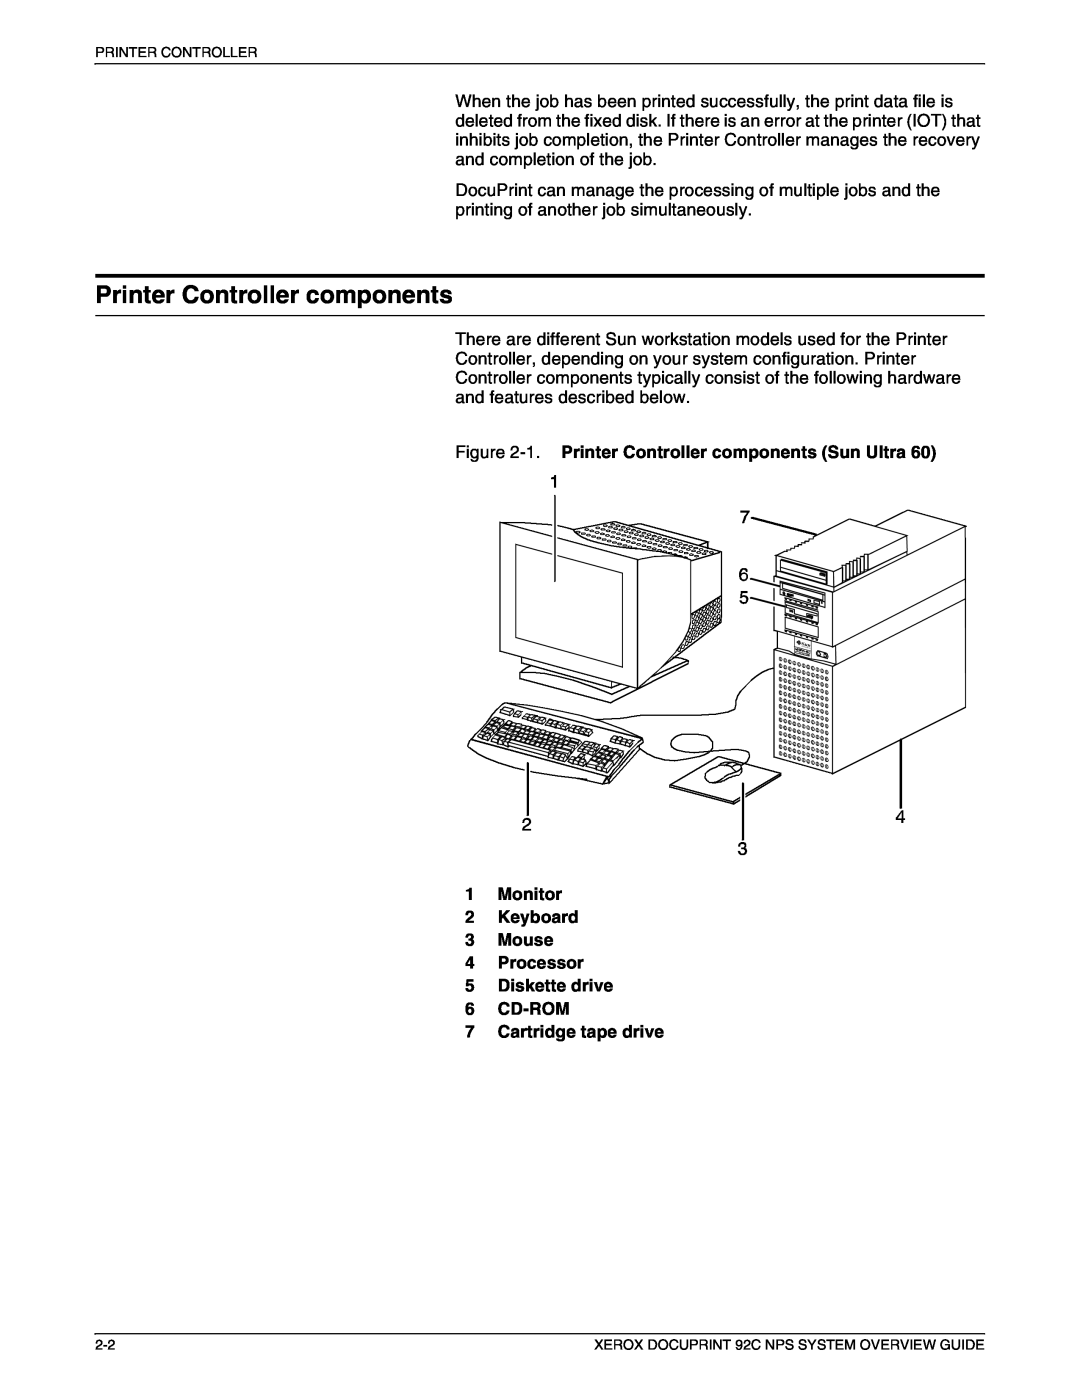 Xerox 92C NPS manual 1. Printer Controller components Sun Ultra 1 Monitor, Cartridge tape drive 